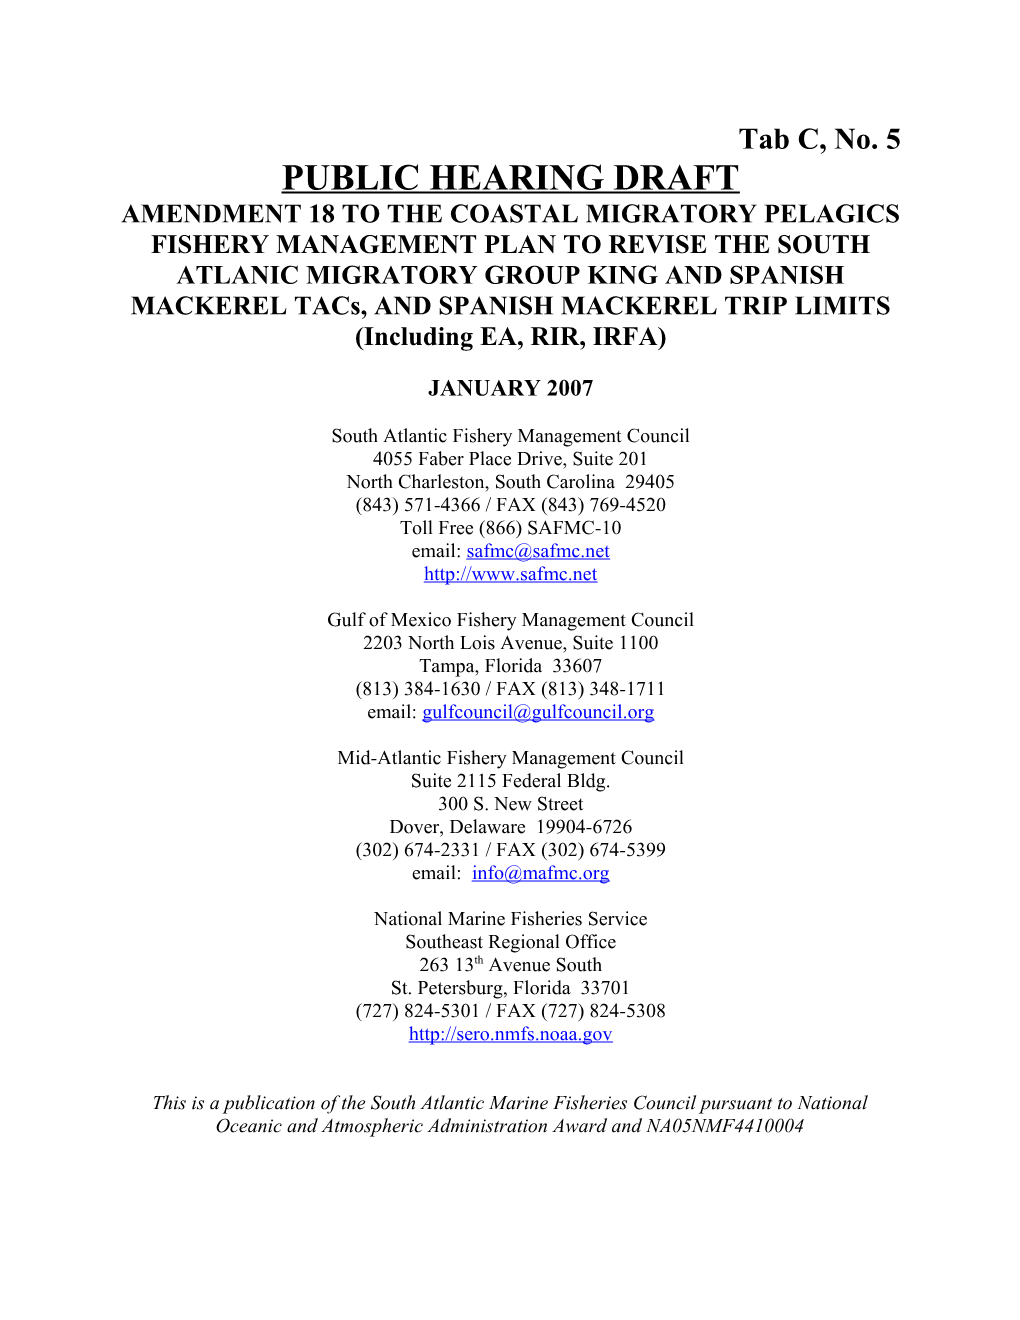 Public Hearing Draft